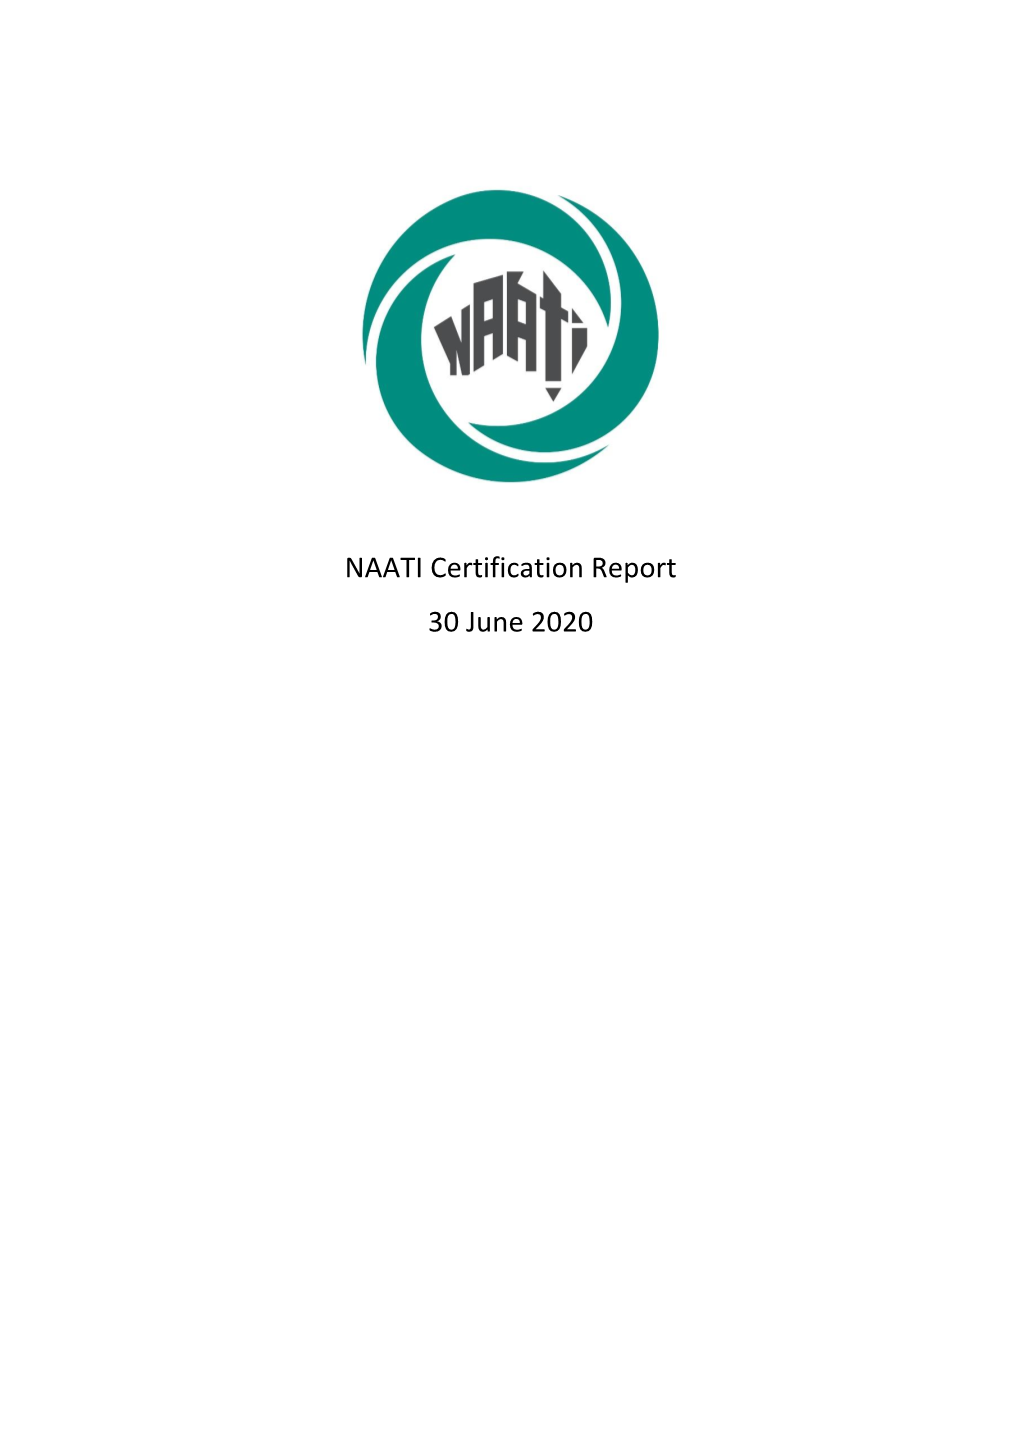 NAATI Certification Report 30 June 2020